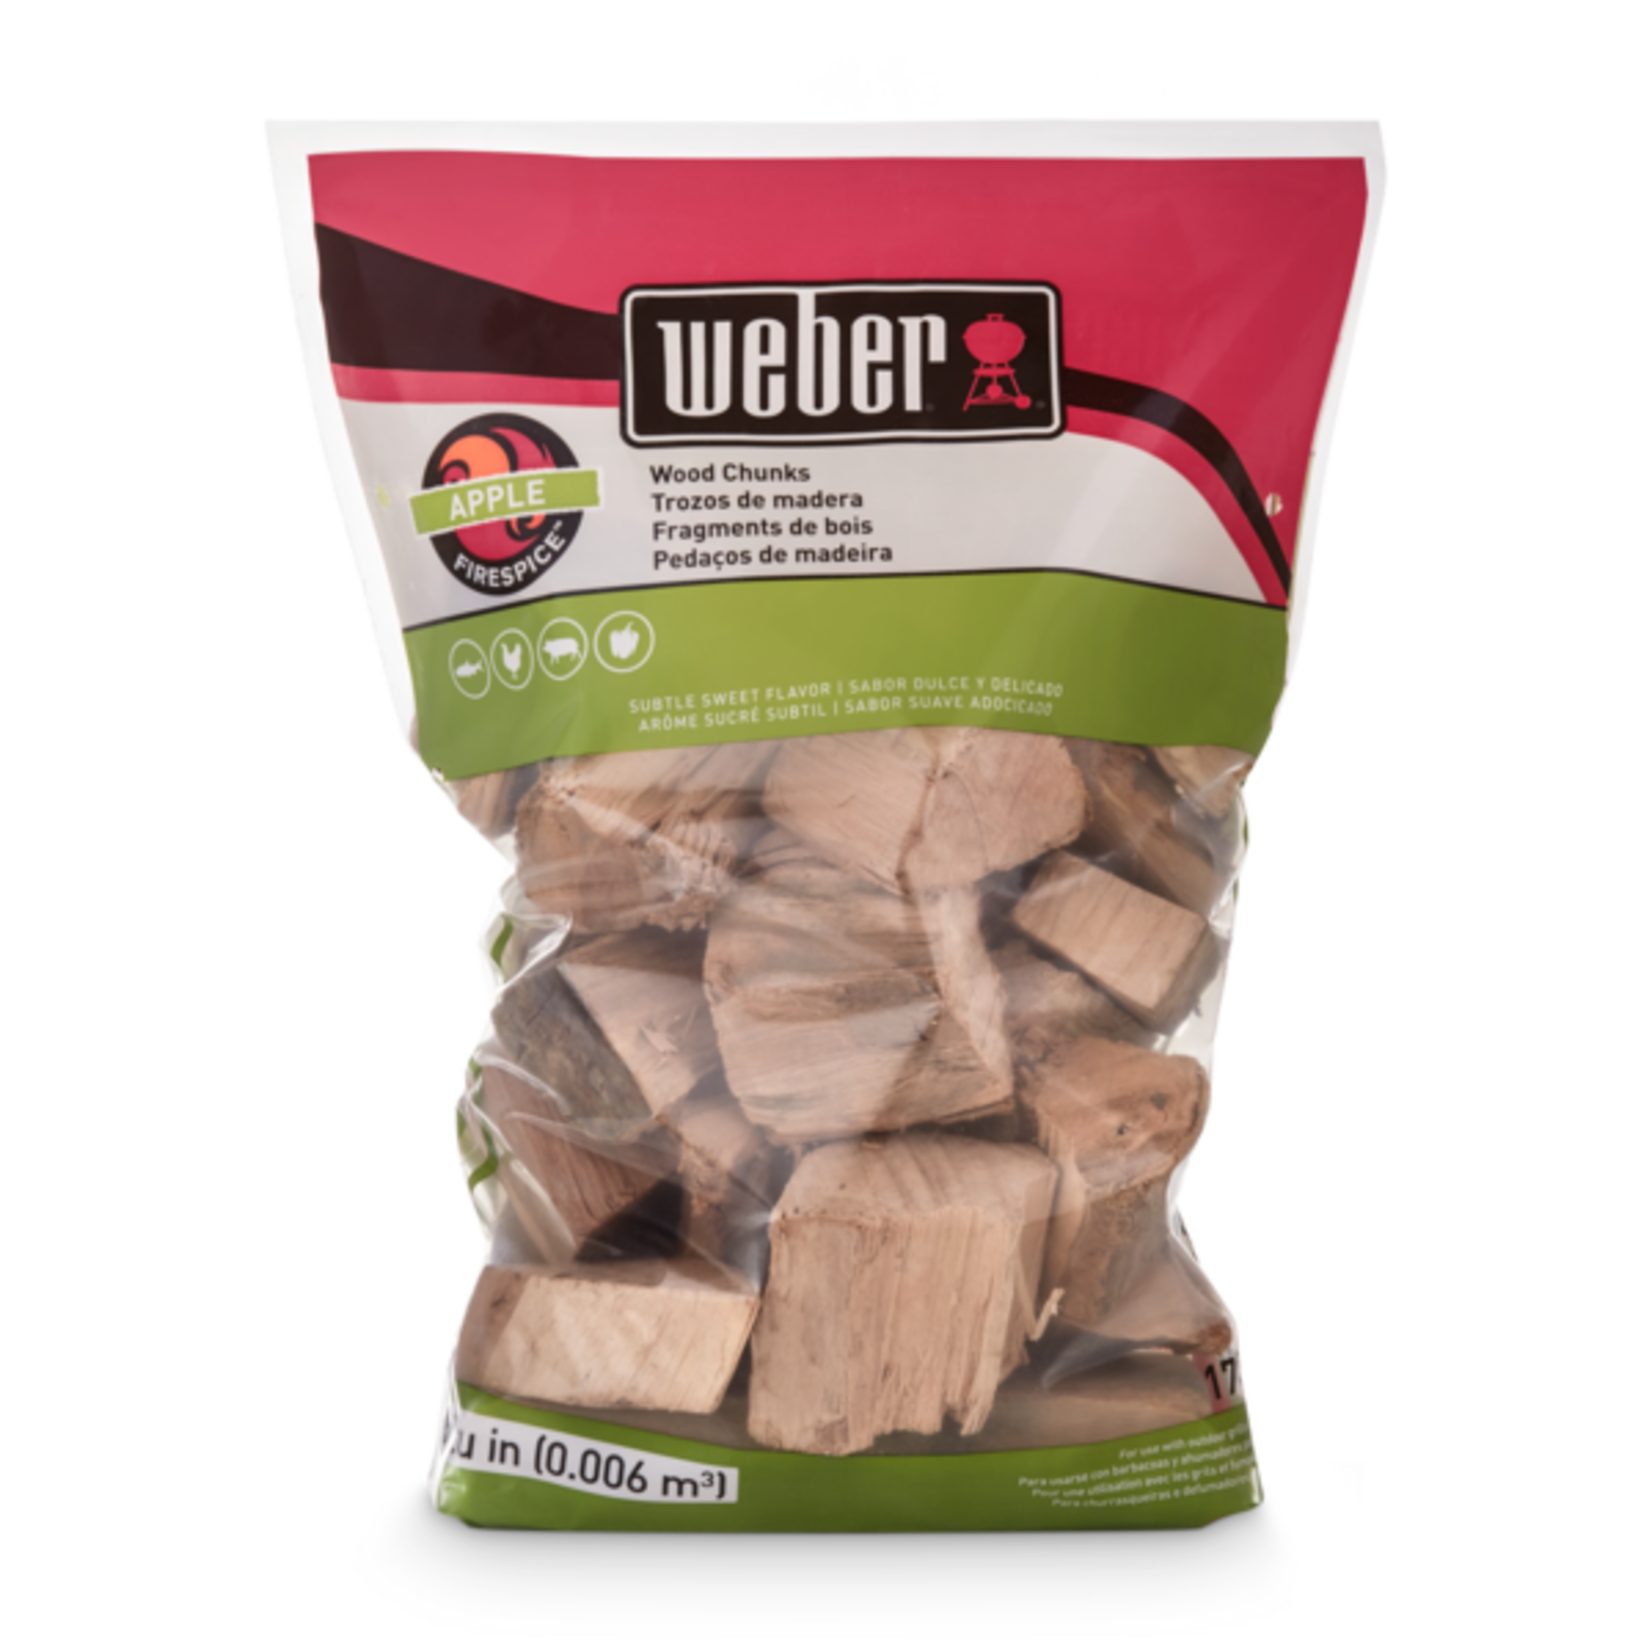 Weber Apple Wood Chunks 6L / 350 in³